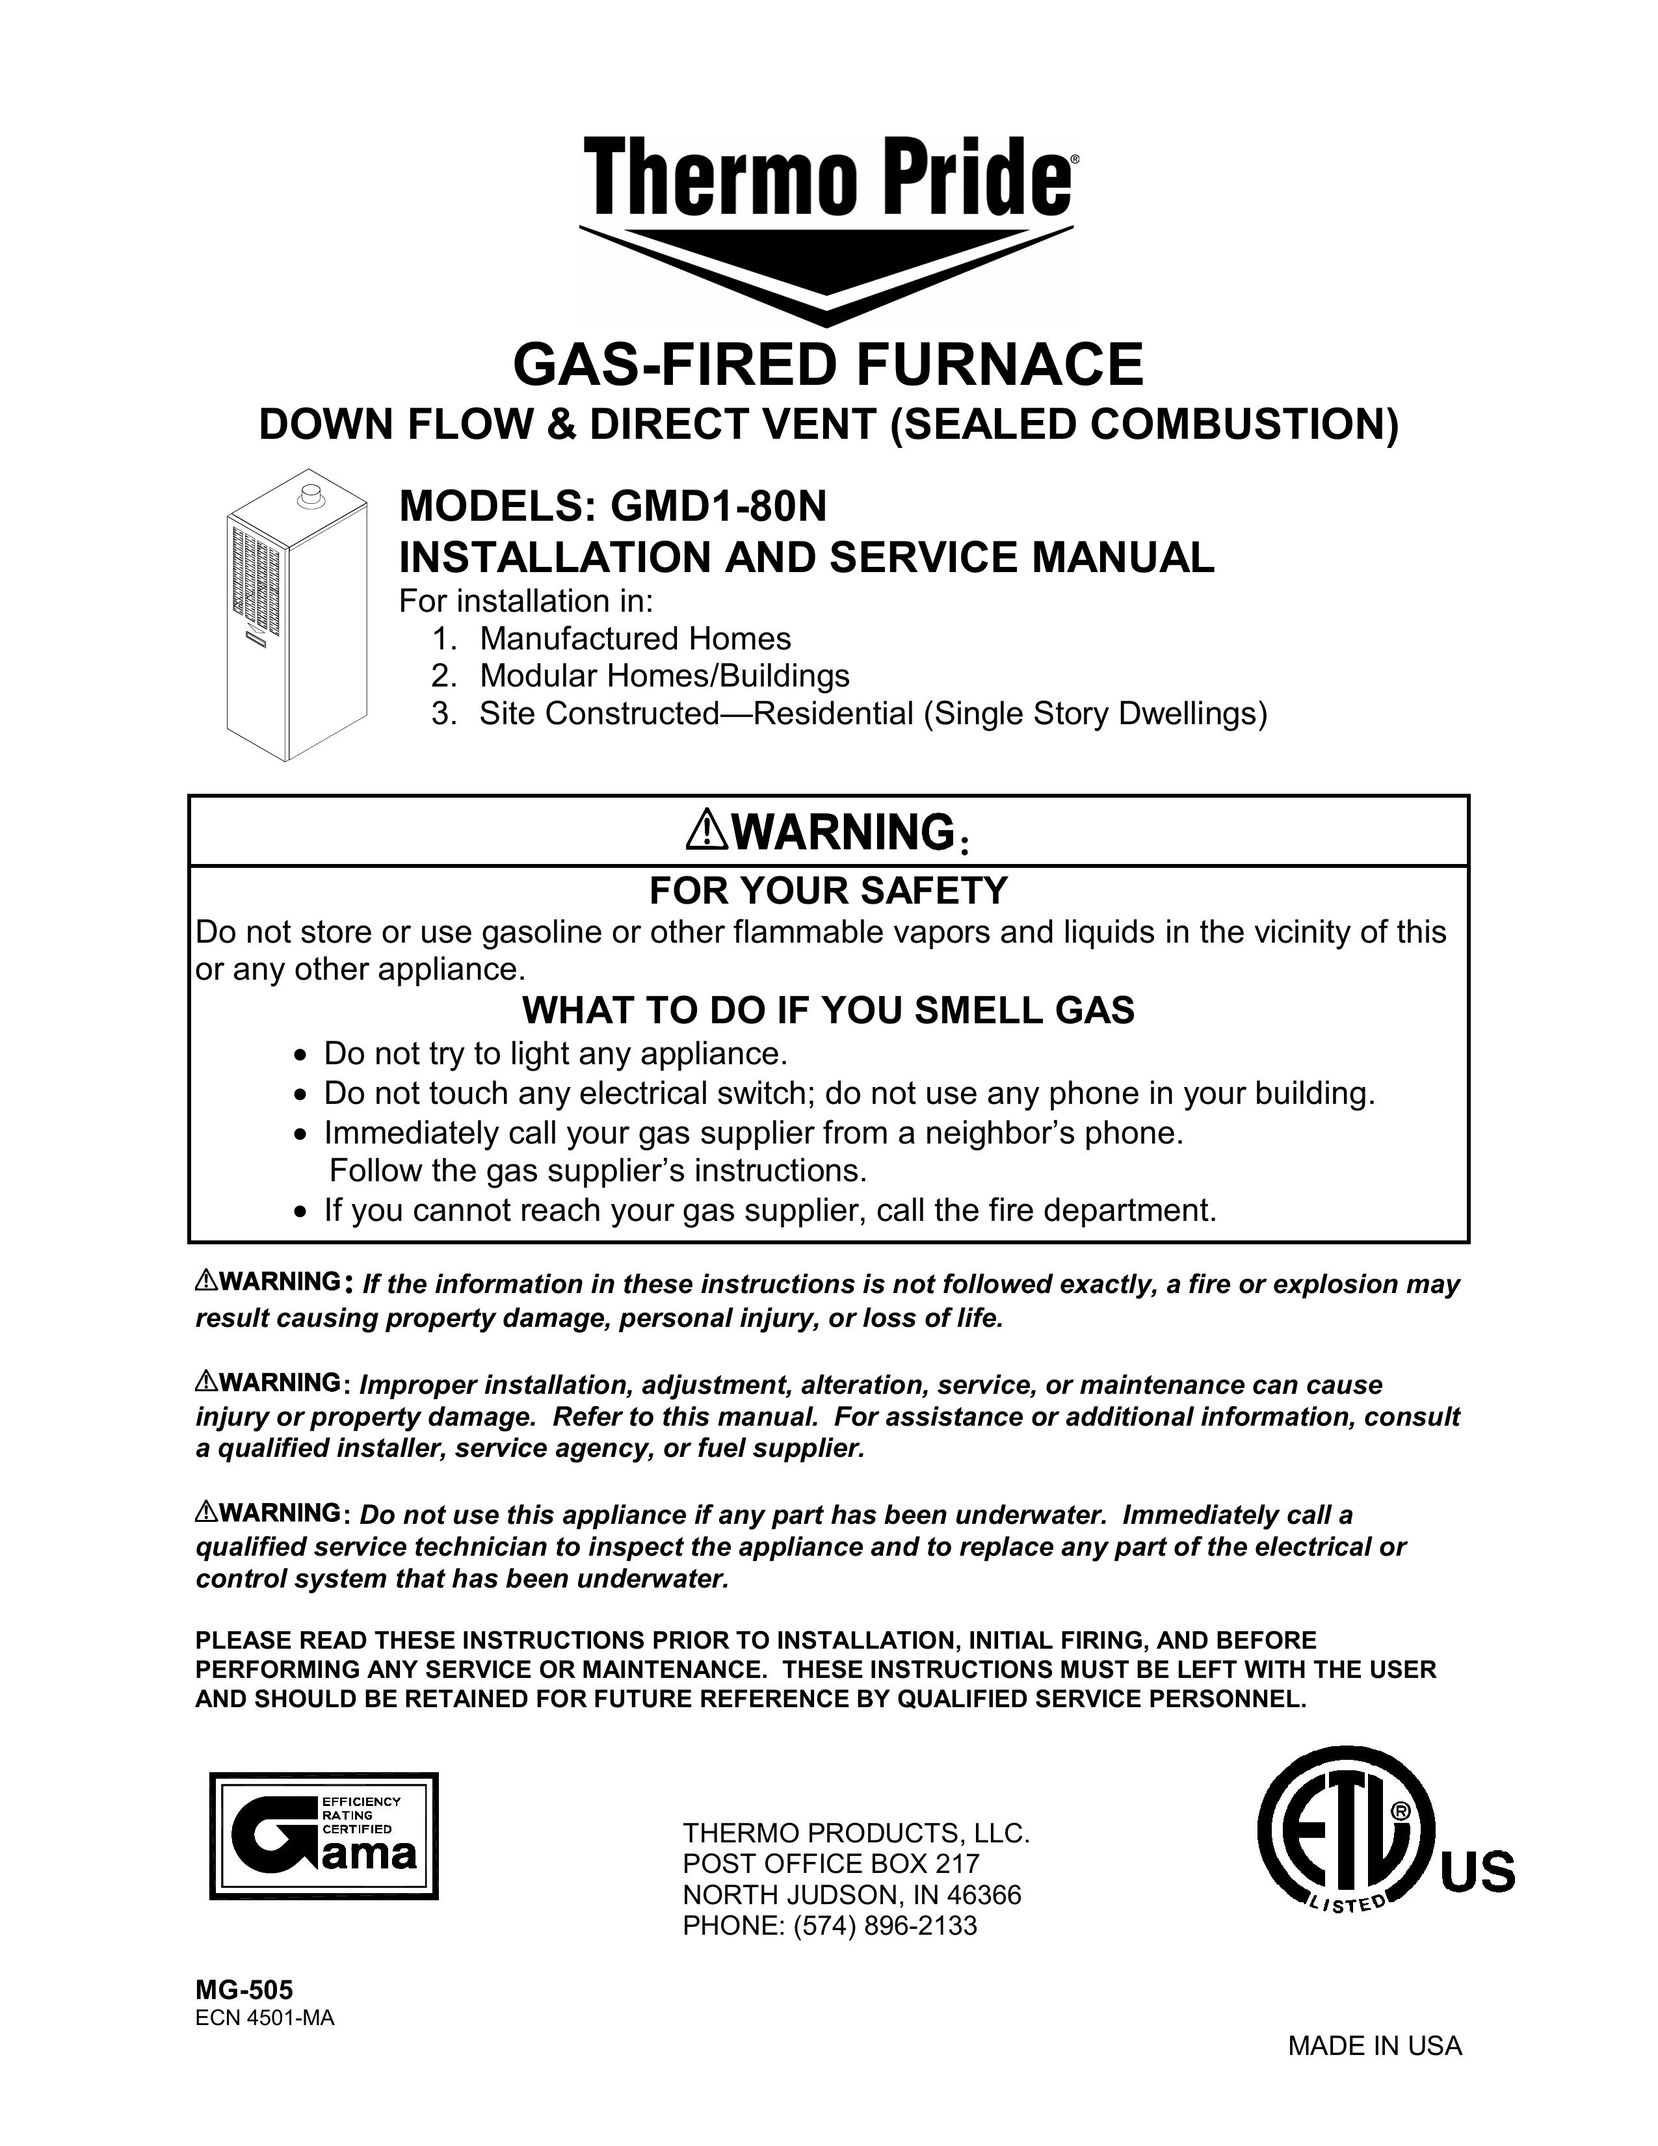 Lodge Manufacturing GMD1-80N Furnace User Manual